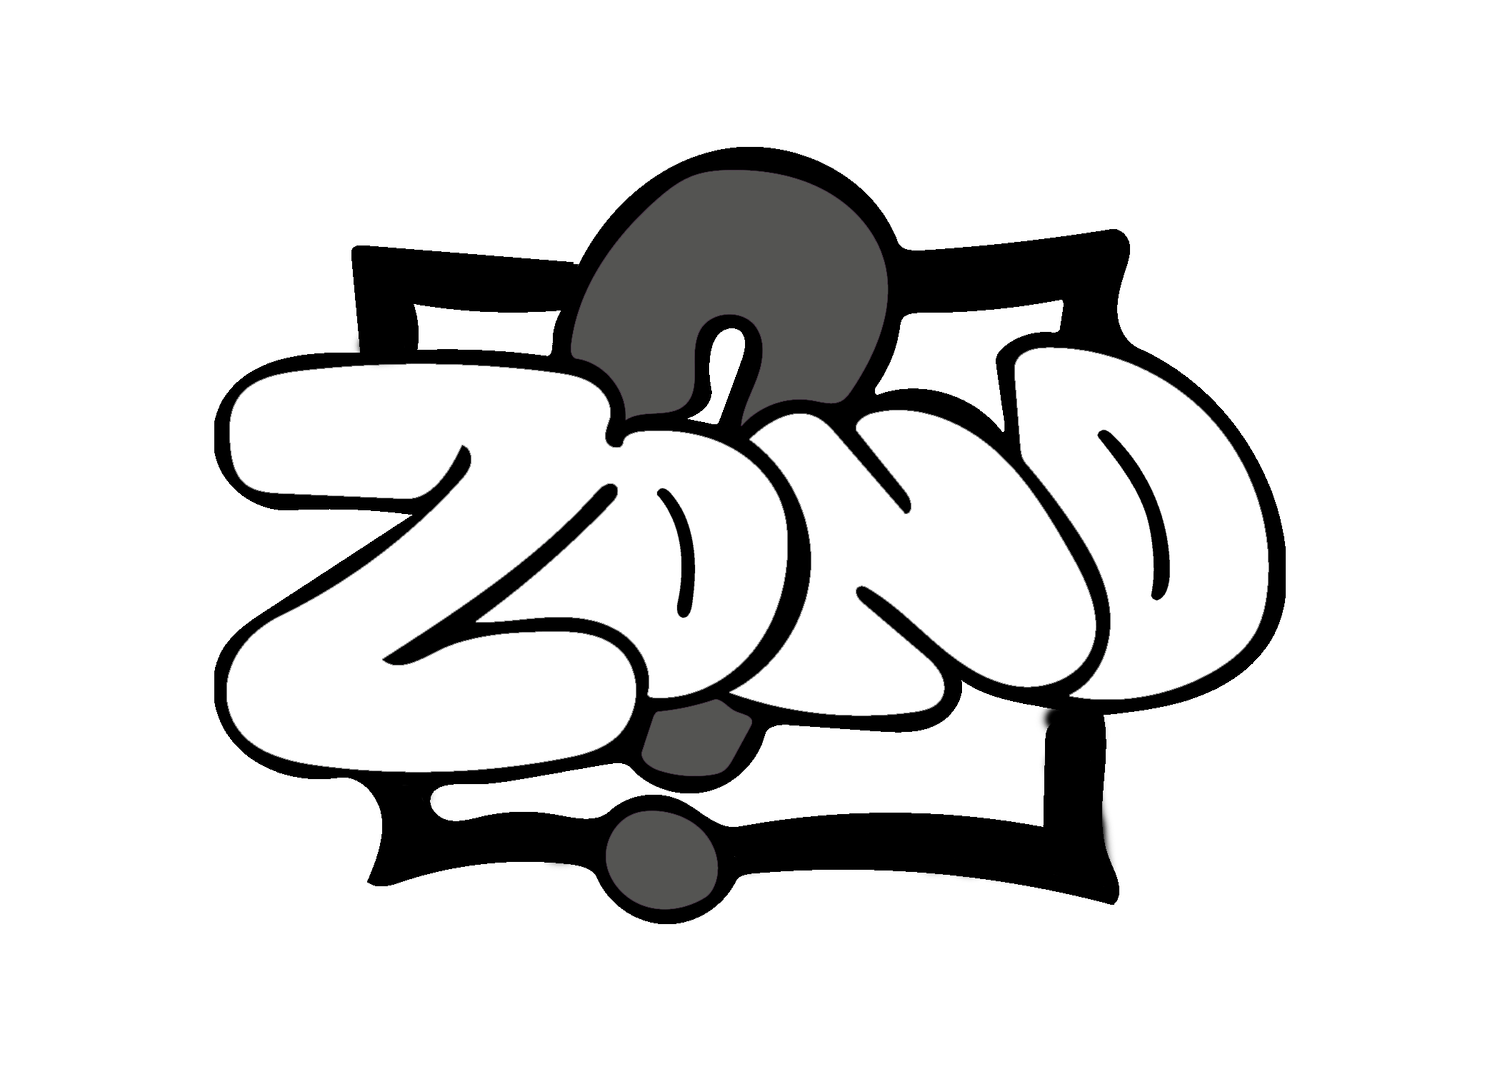 zond-logo